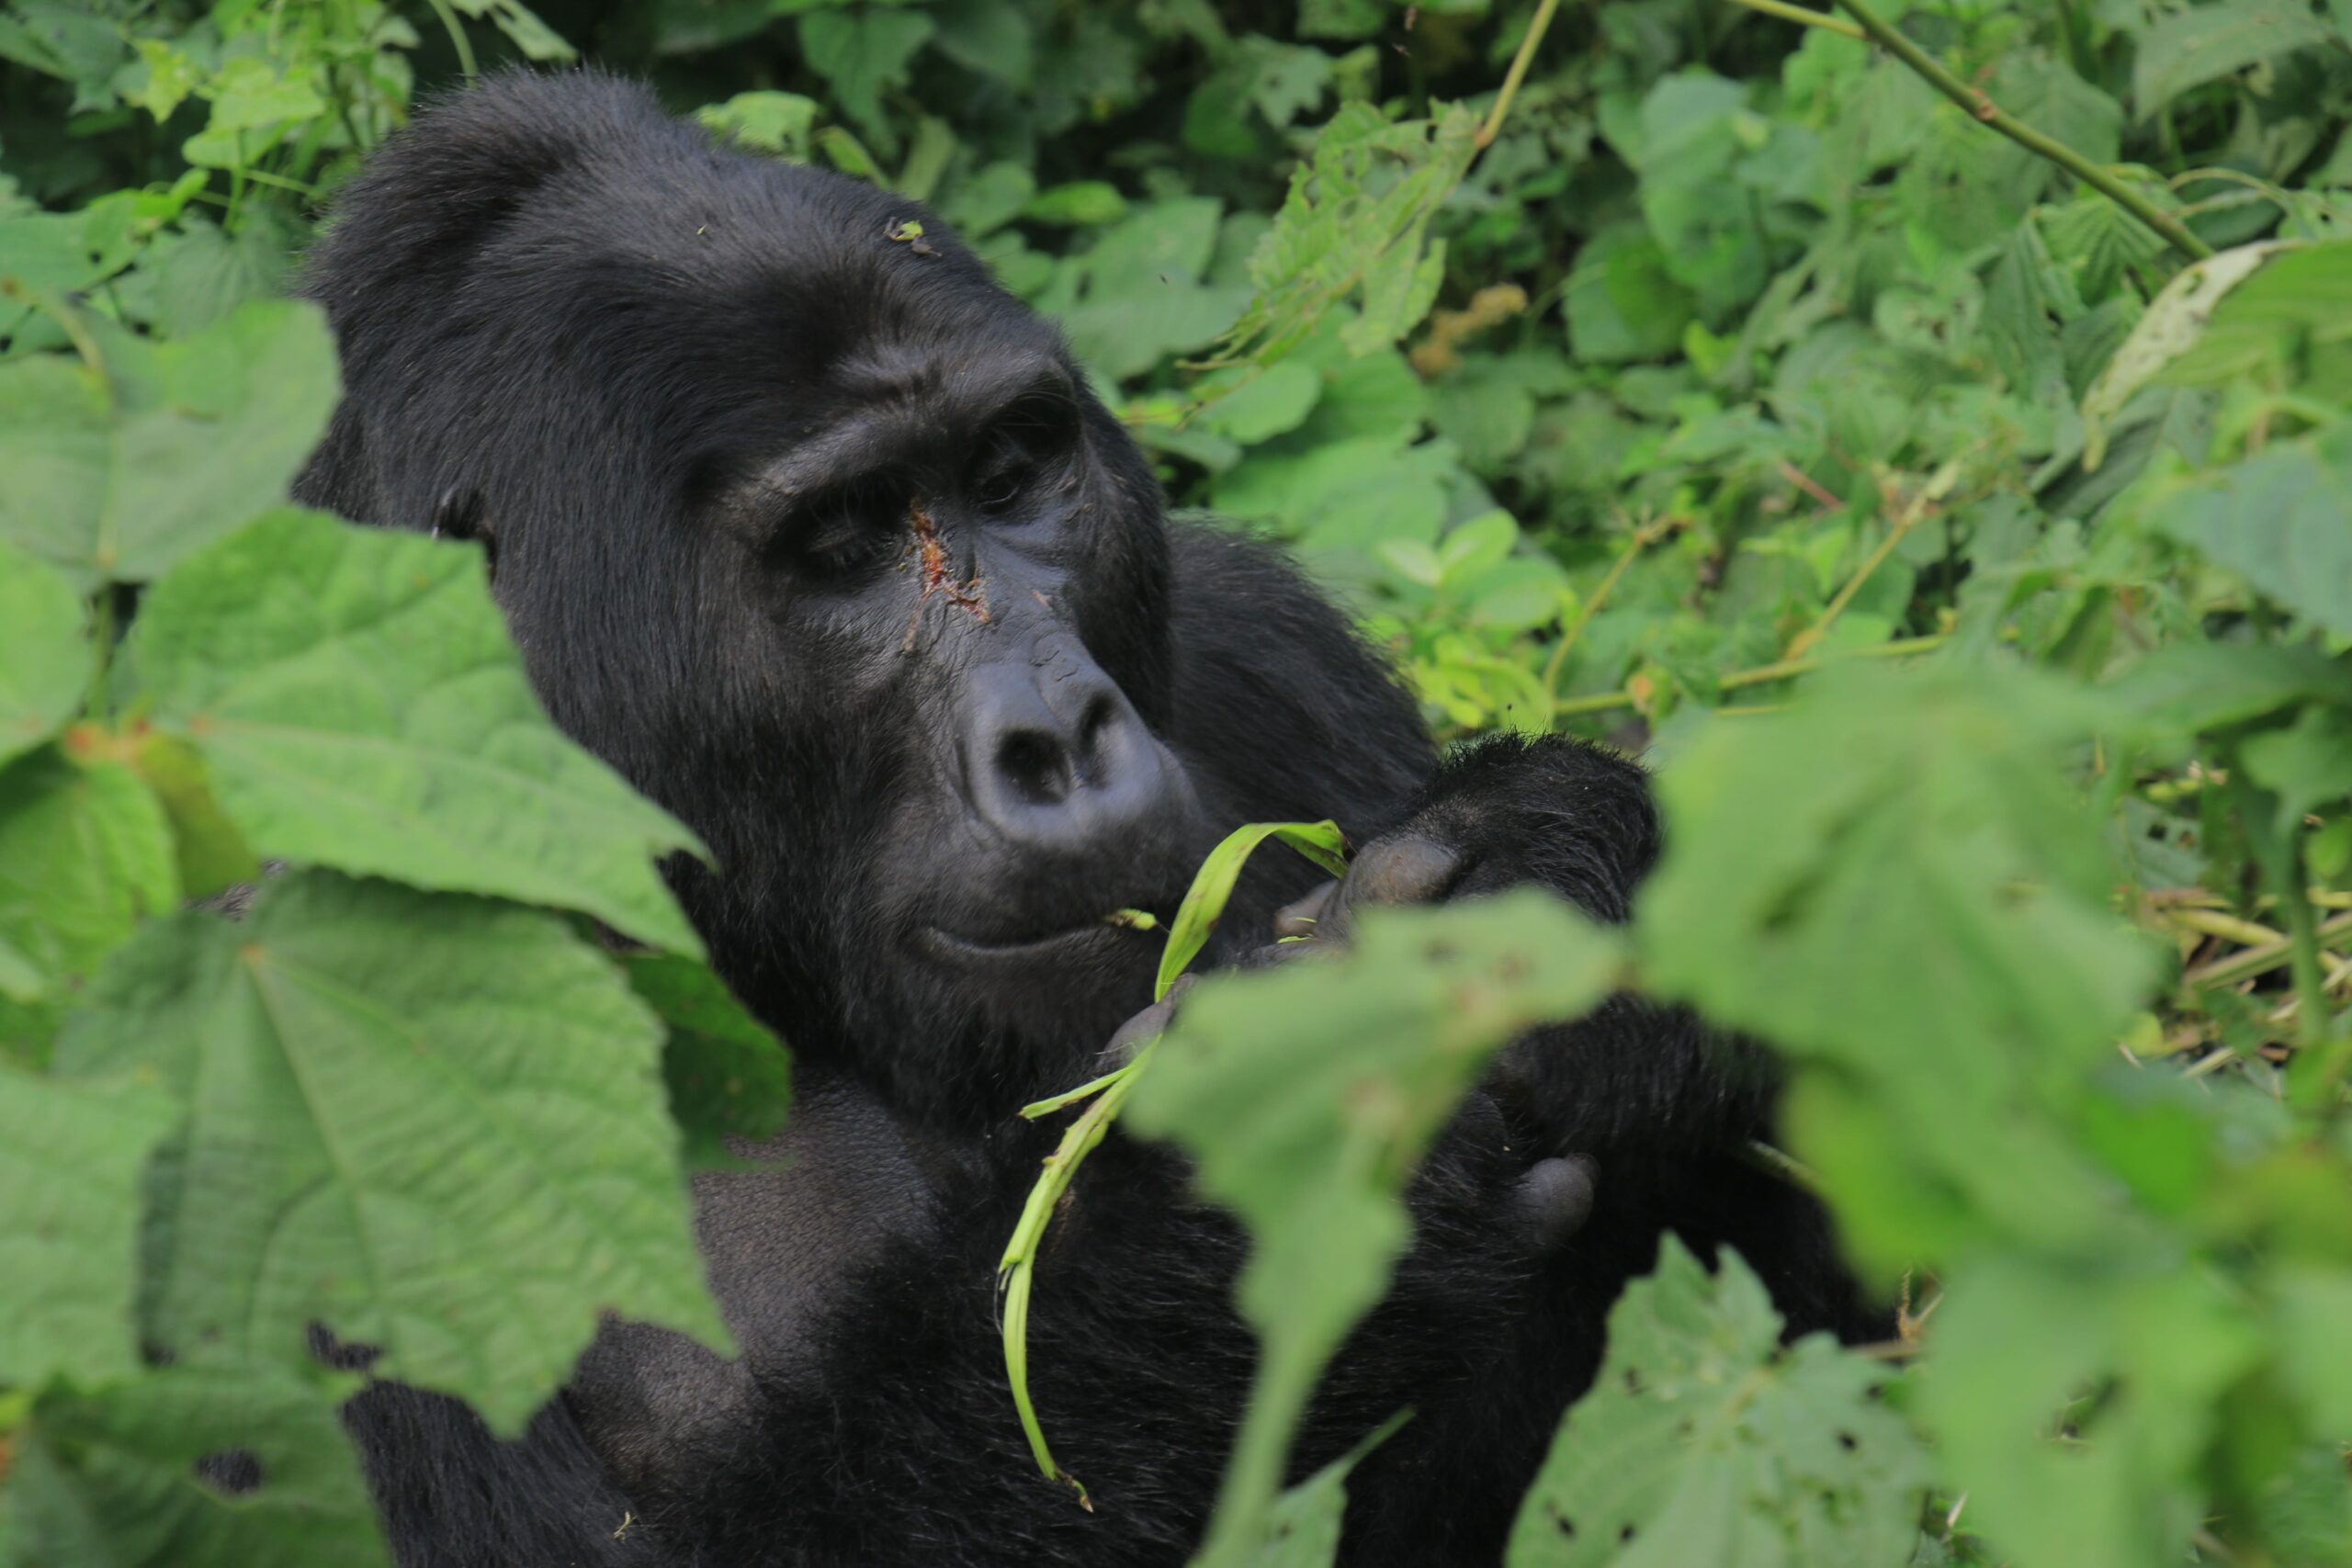 www.mukisasafarisuganda.com best tour travel operator c0mpany gorillas chimpanzee tracking trekking photos min scaled